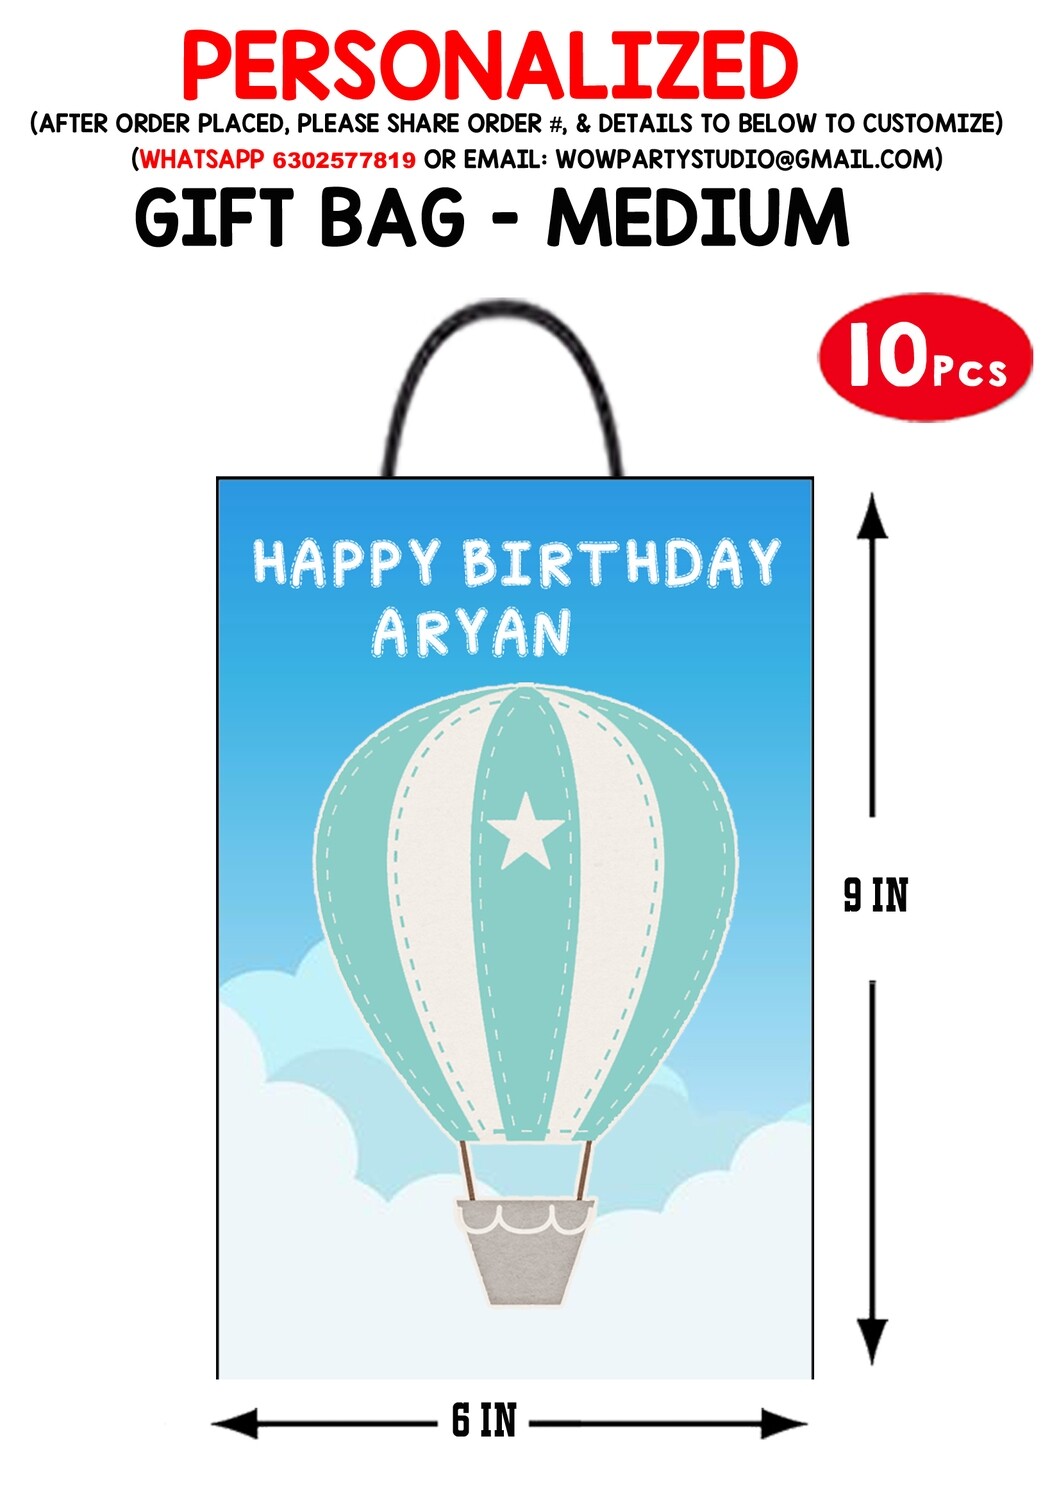 Hot Air Balloon - Gift Bag Medium (10 Pcs)